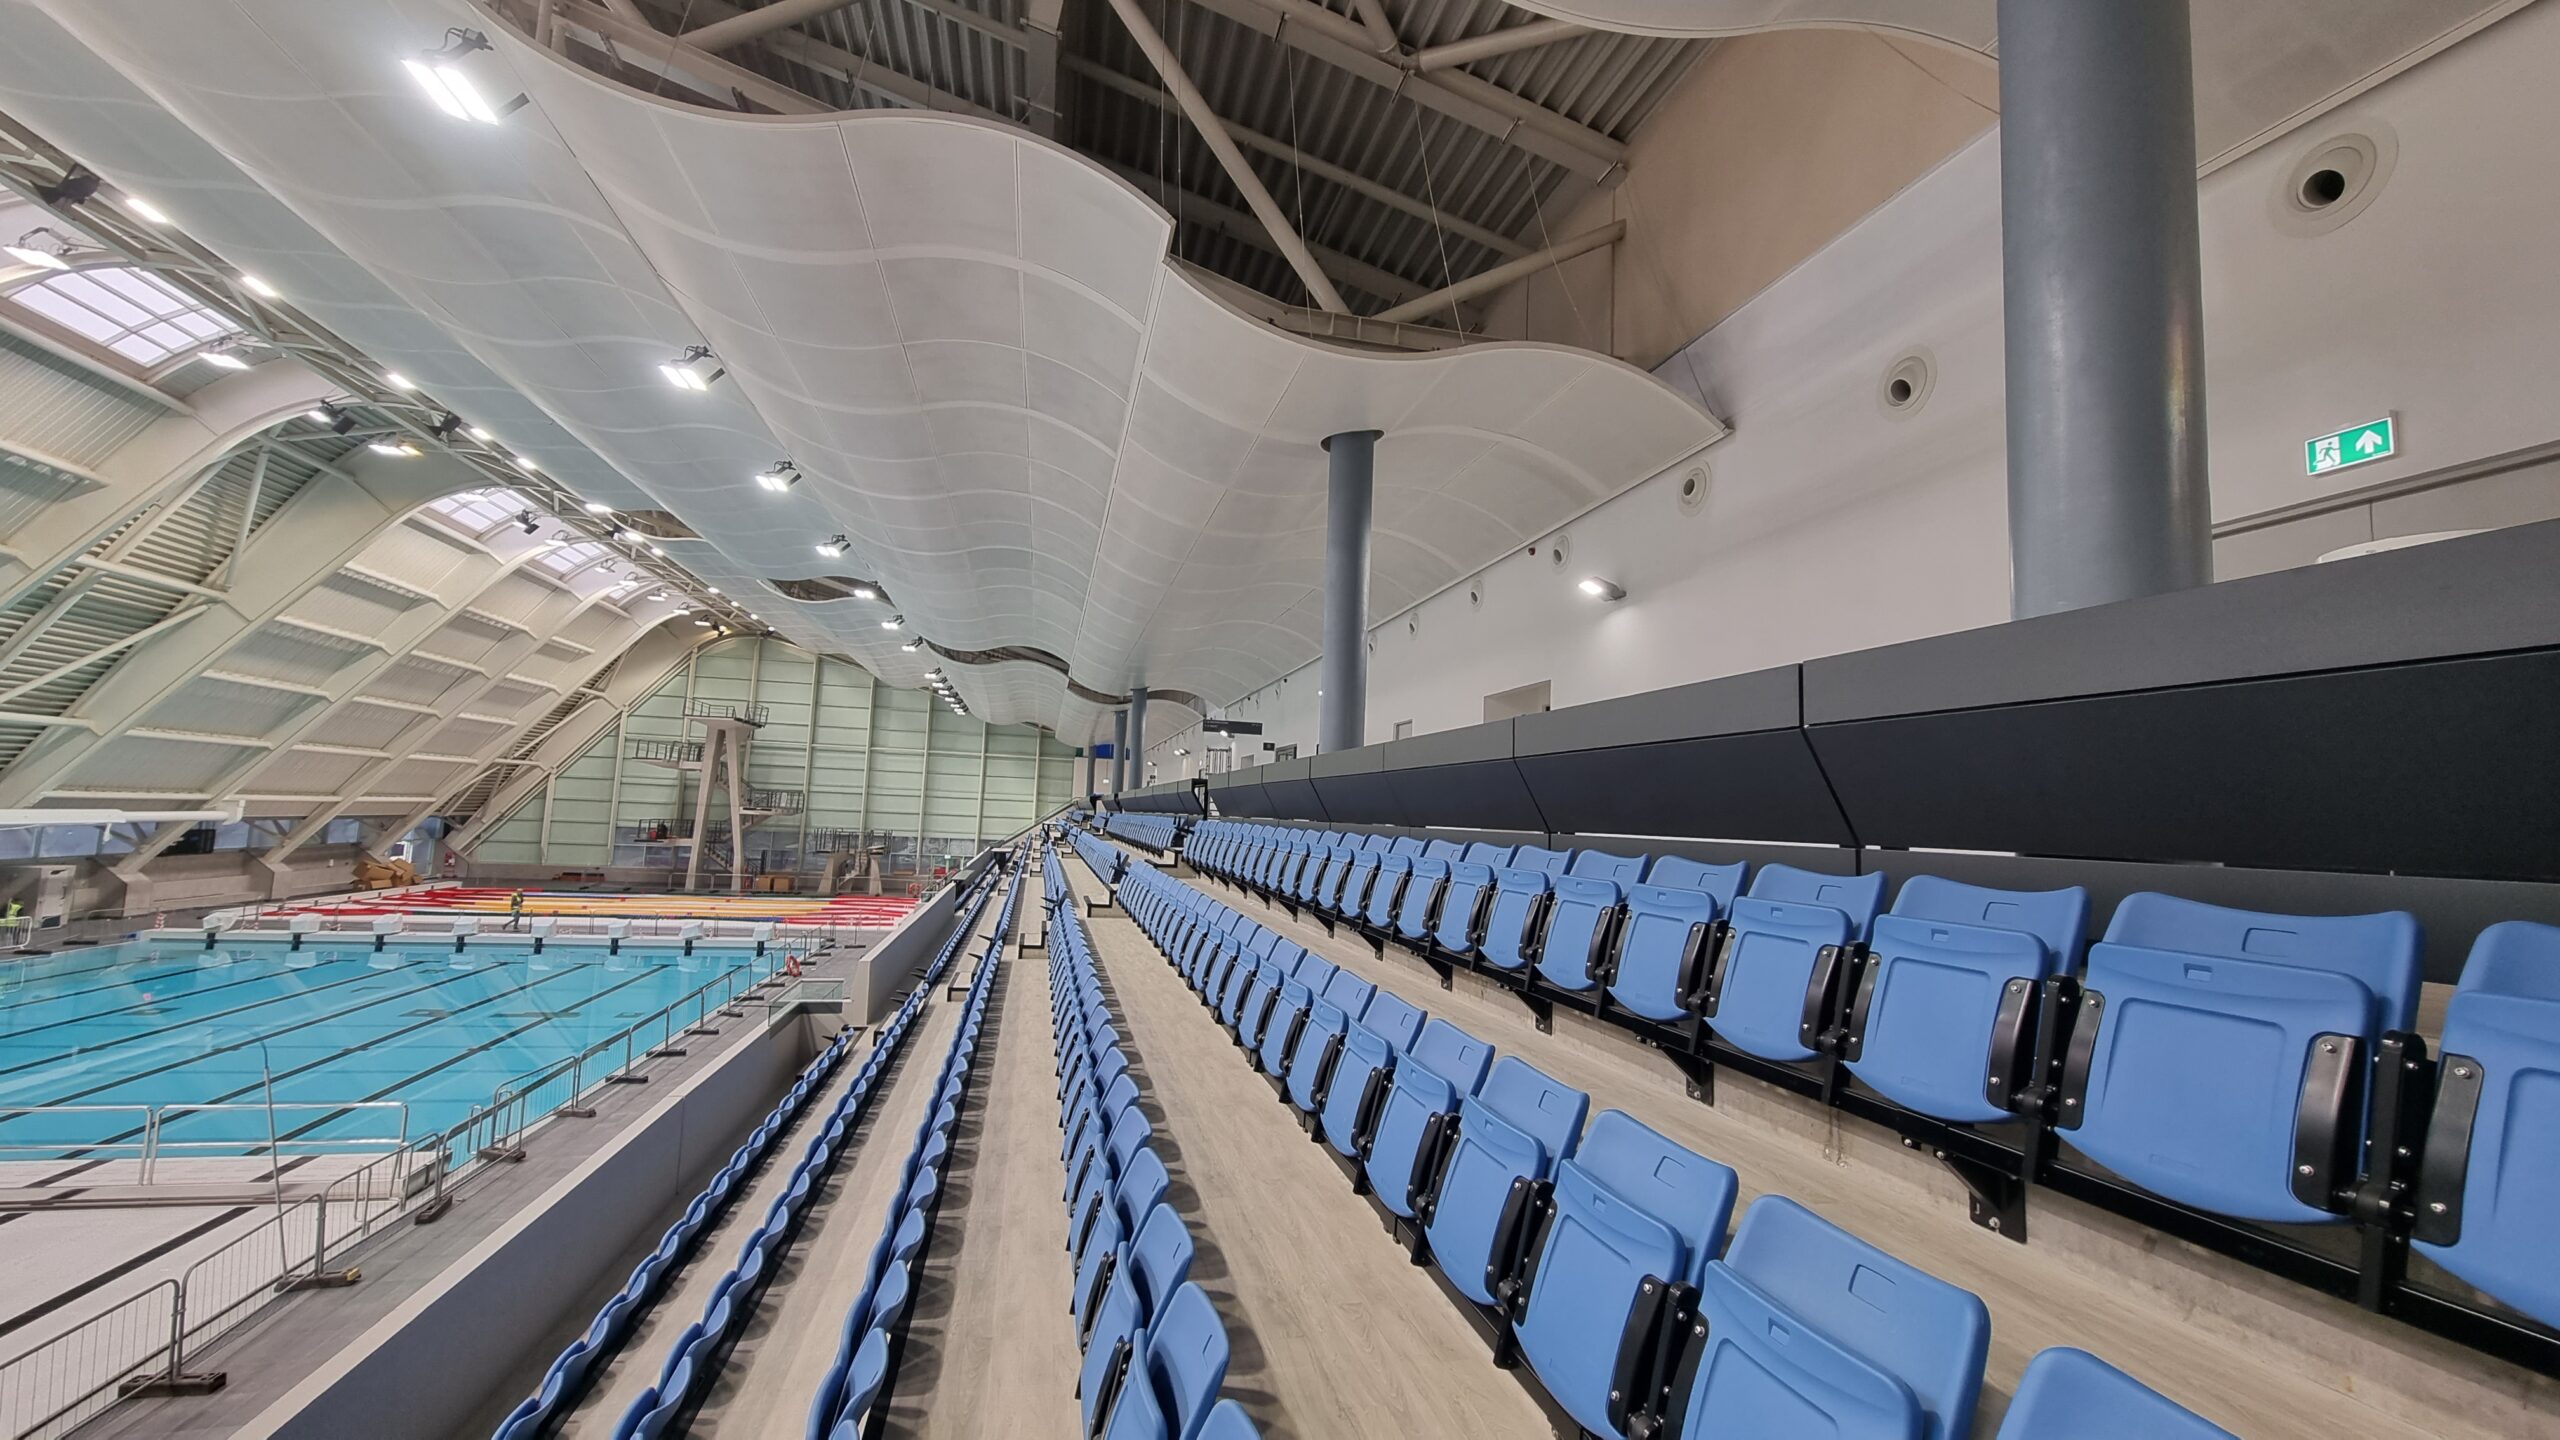 Manchester Aquatics Centre is set to reopen after a refurbishment